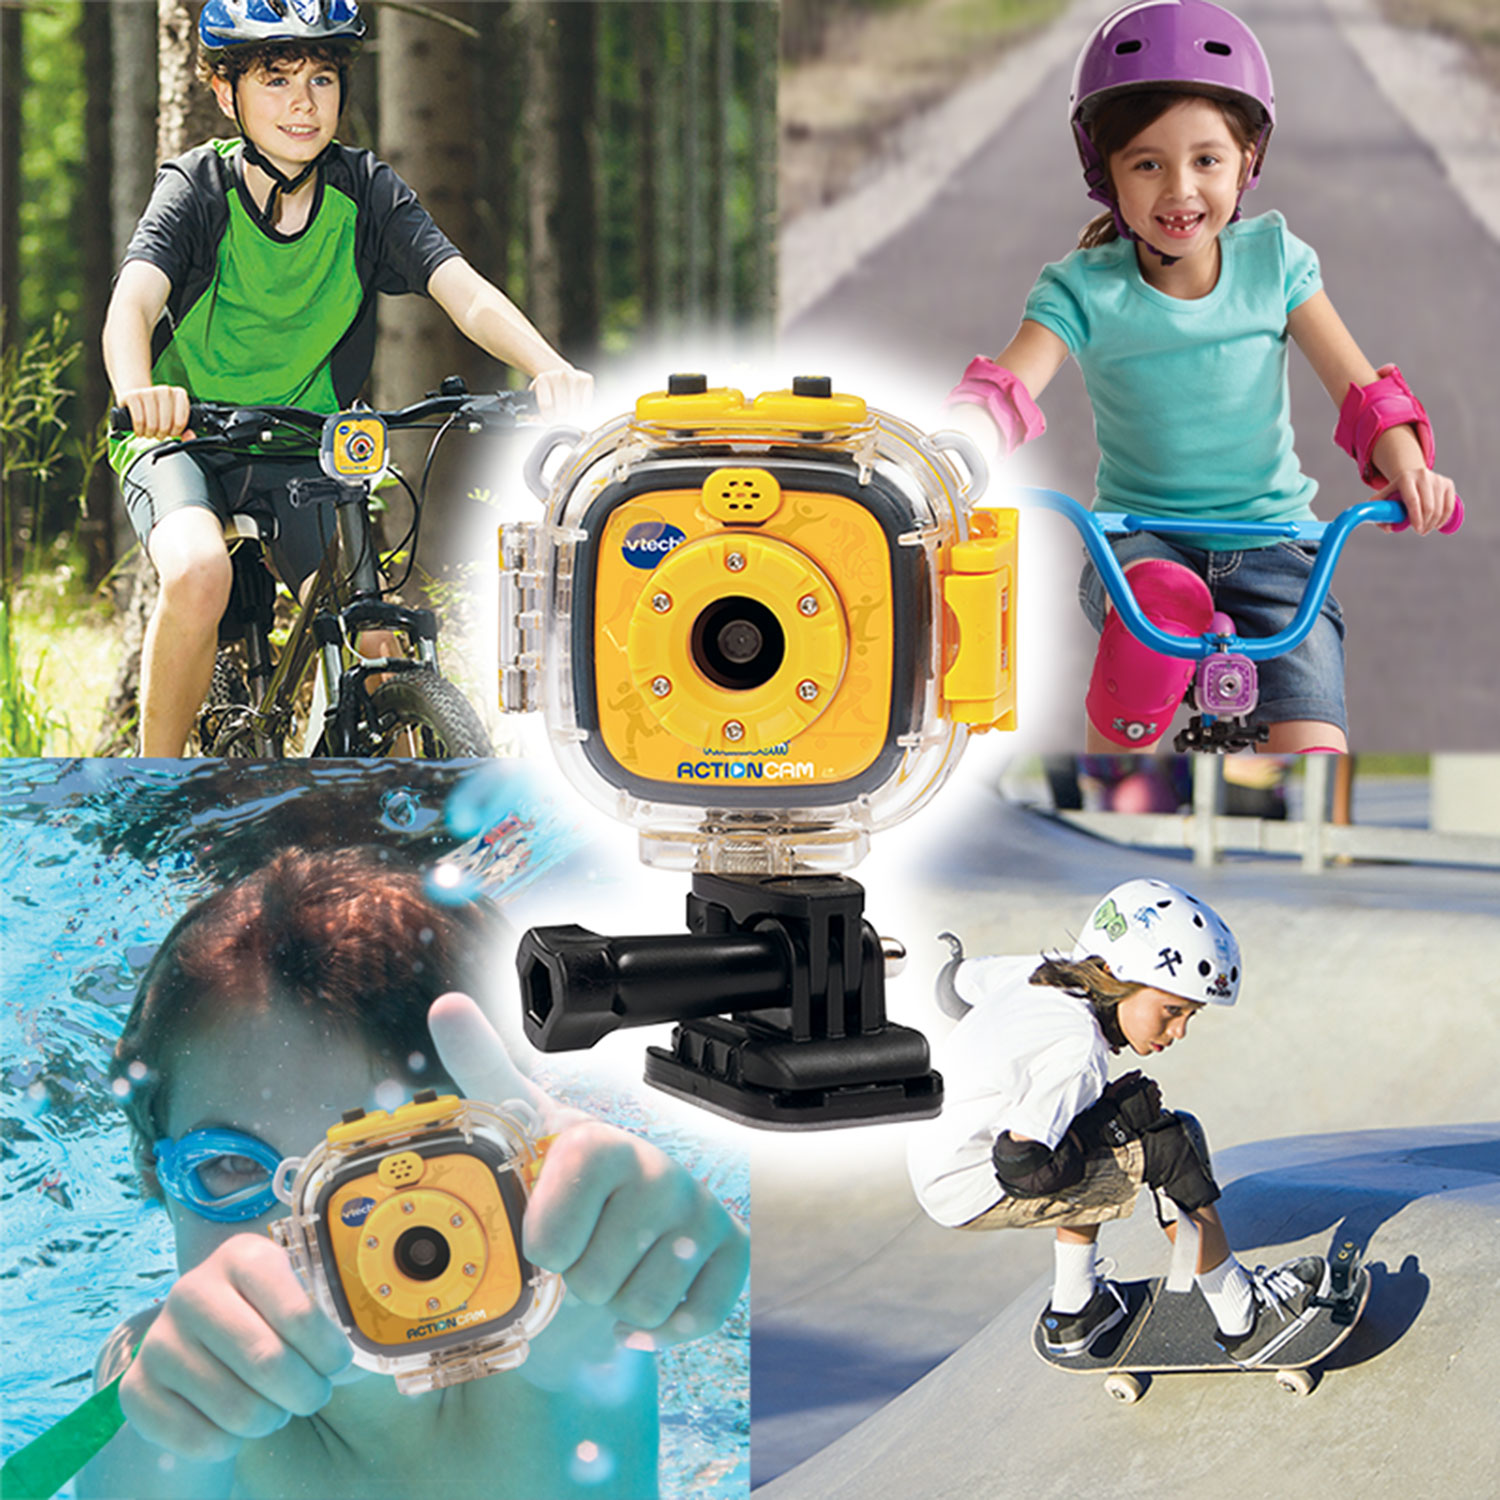 VTech Action Cam HD Action Camera for Kids Kids Digital Camera for Outdoor 